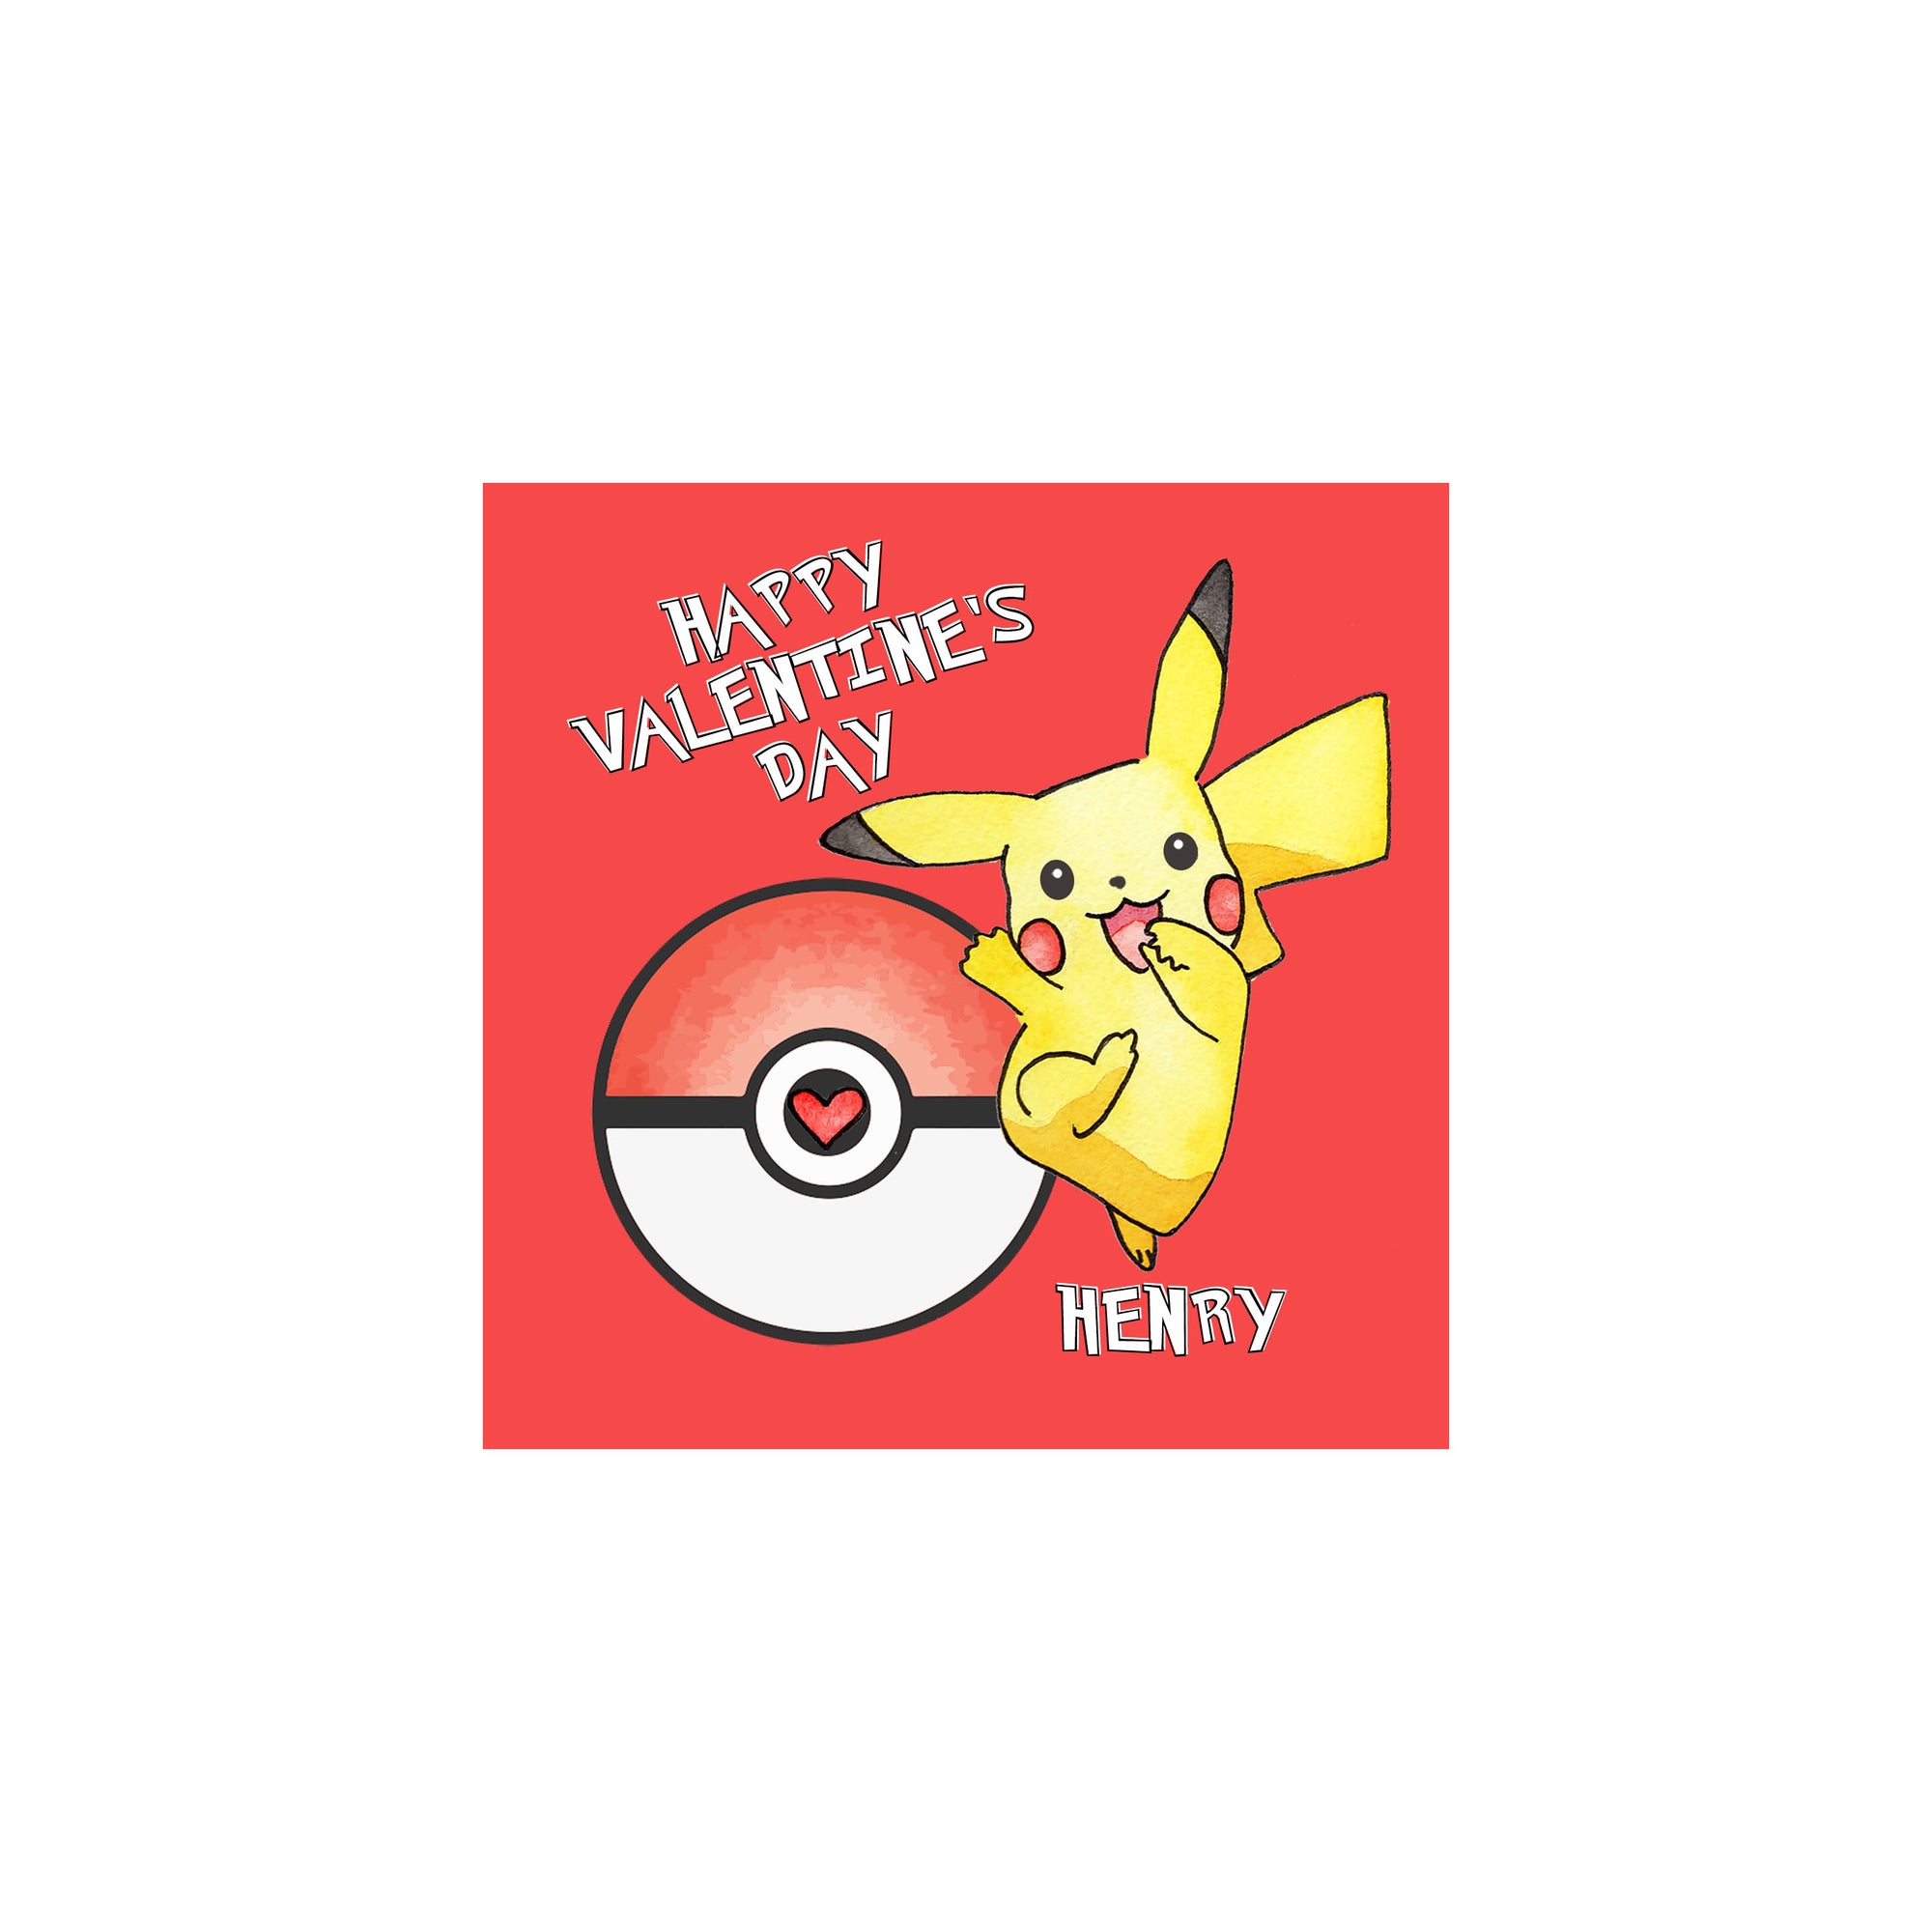 Pokemon Valentine Gift Tags & Stickers